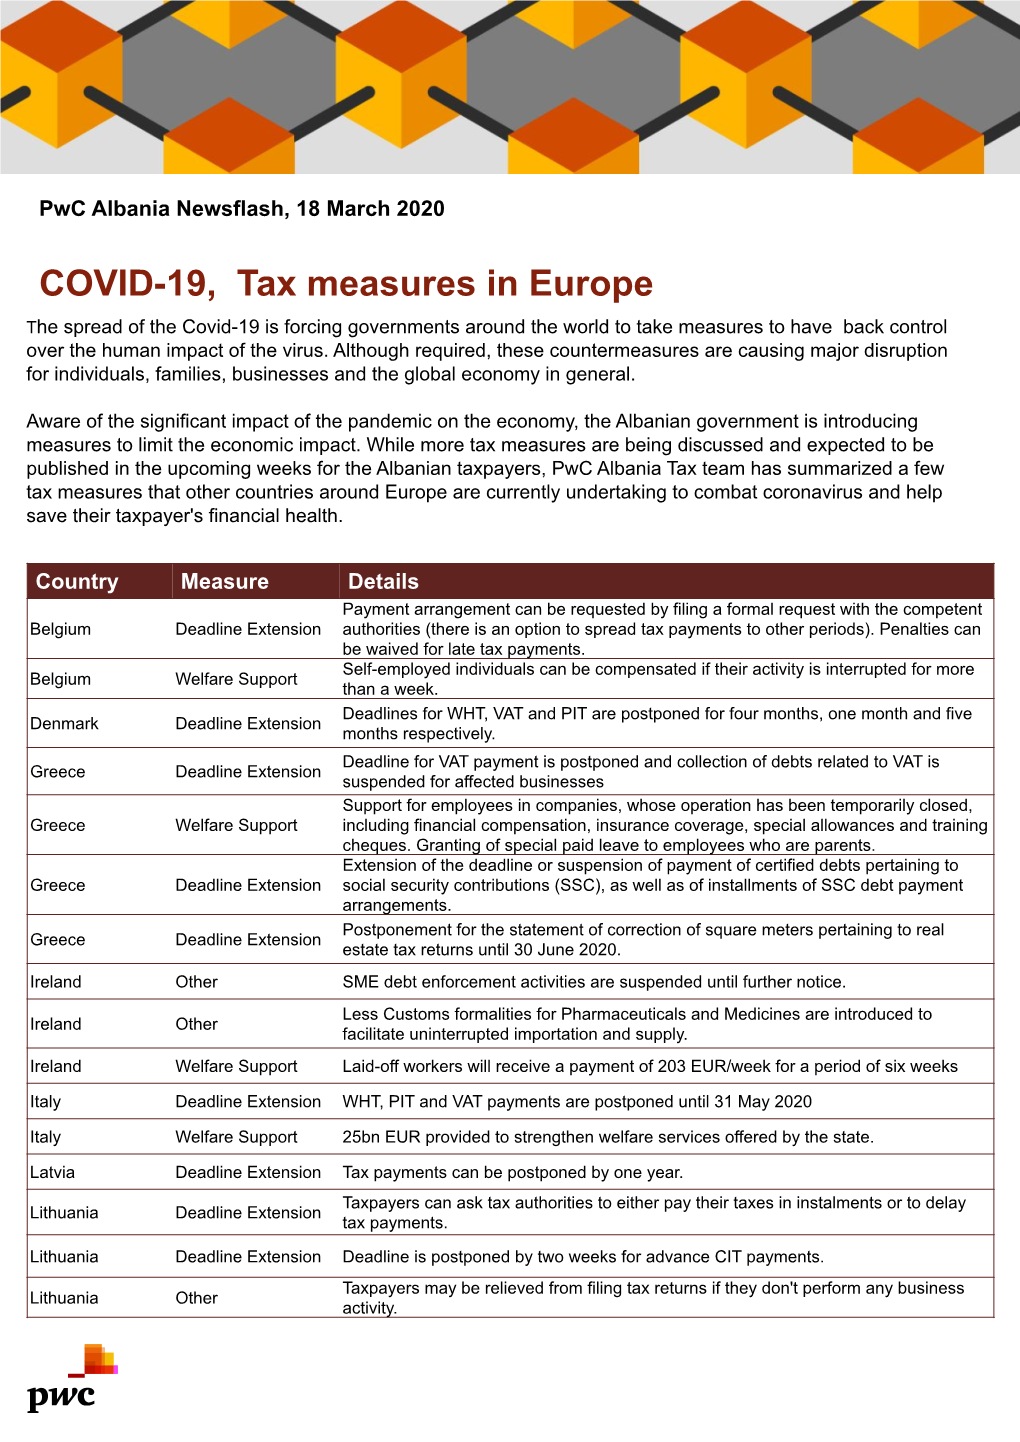 COVID-19 Tax Measures in Albania